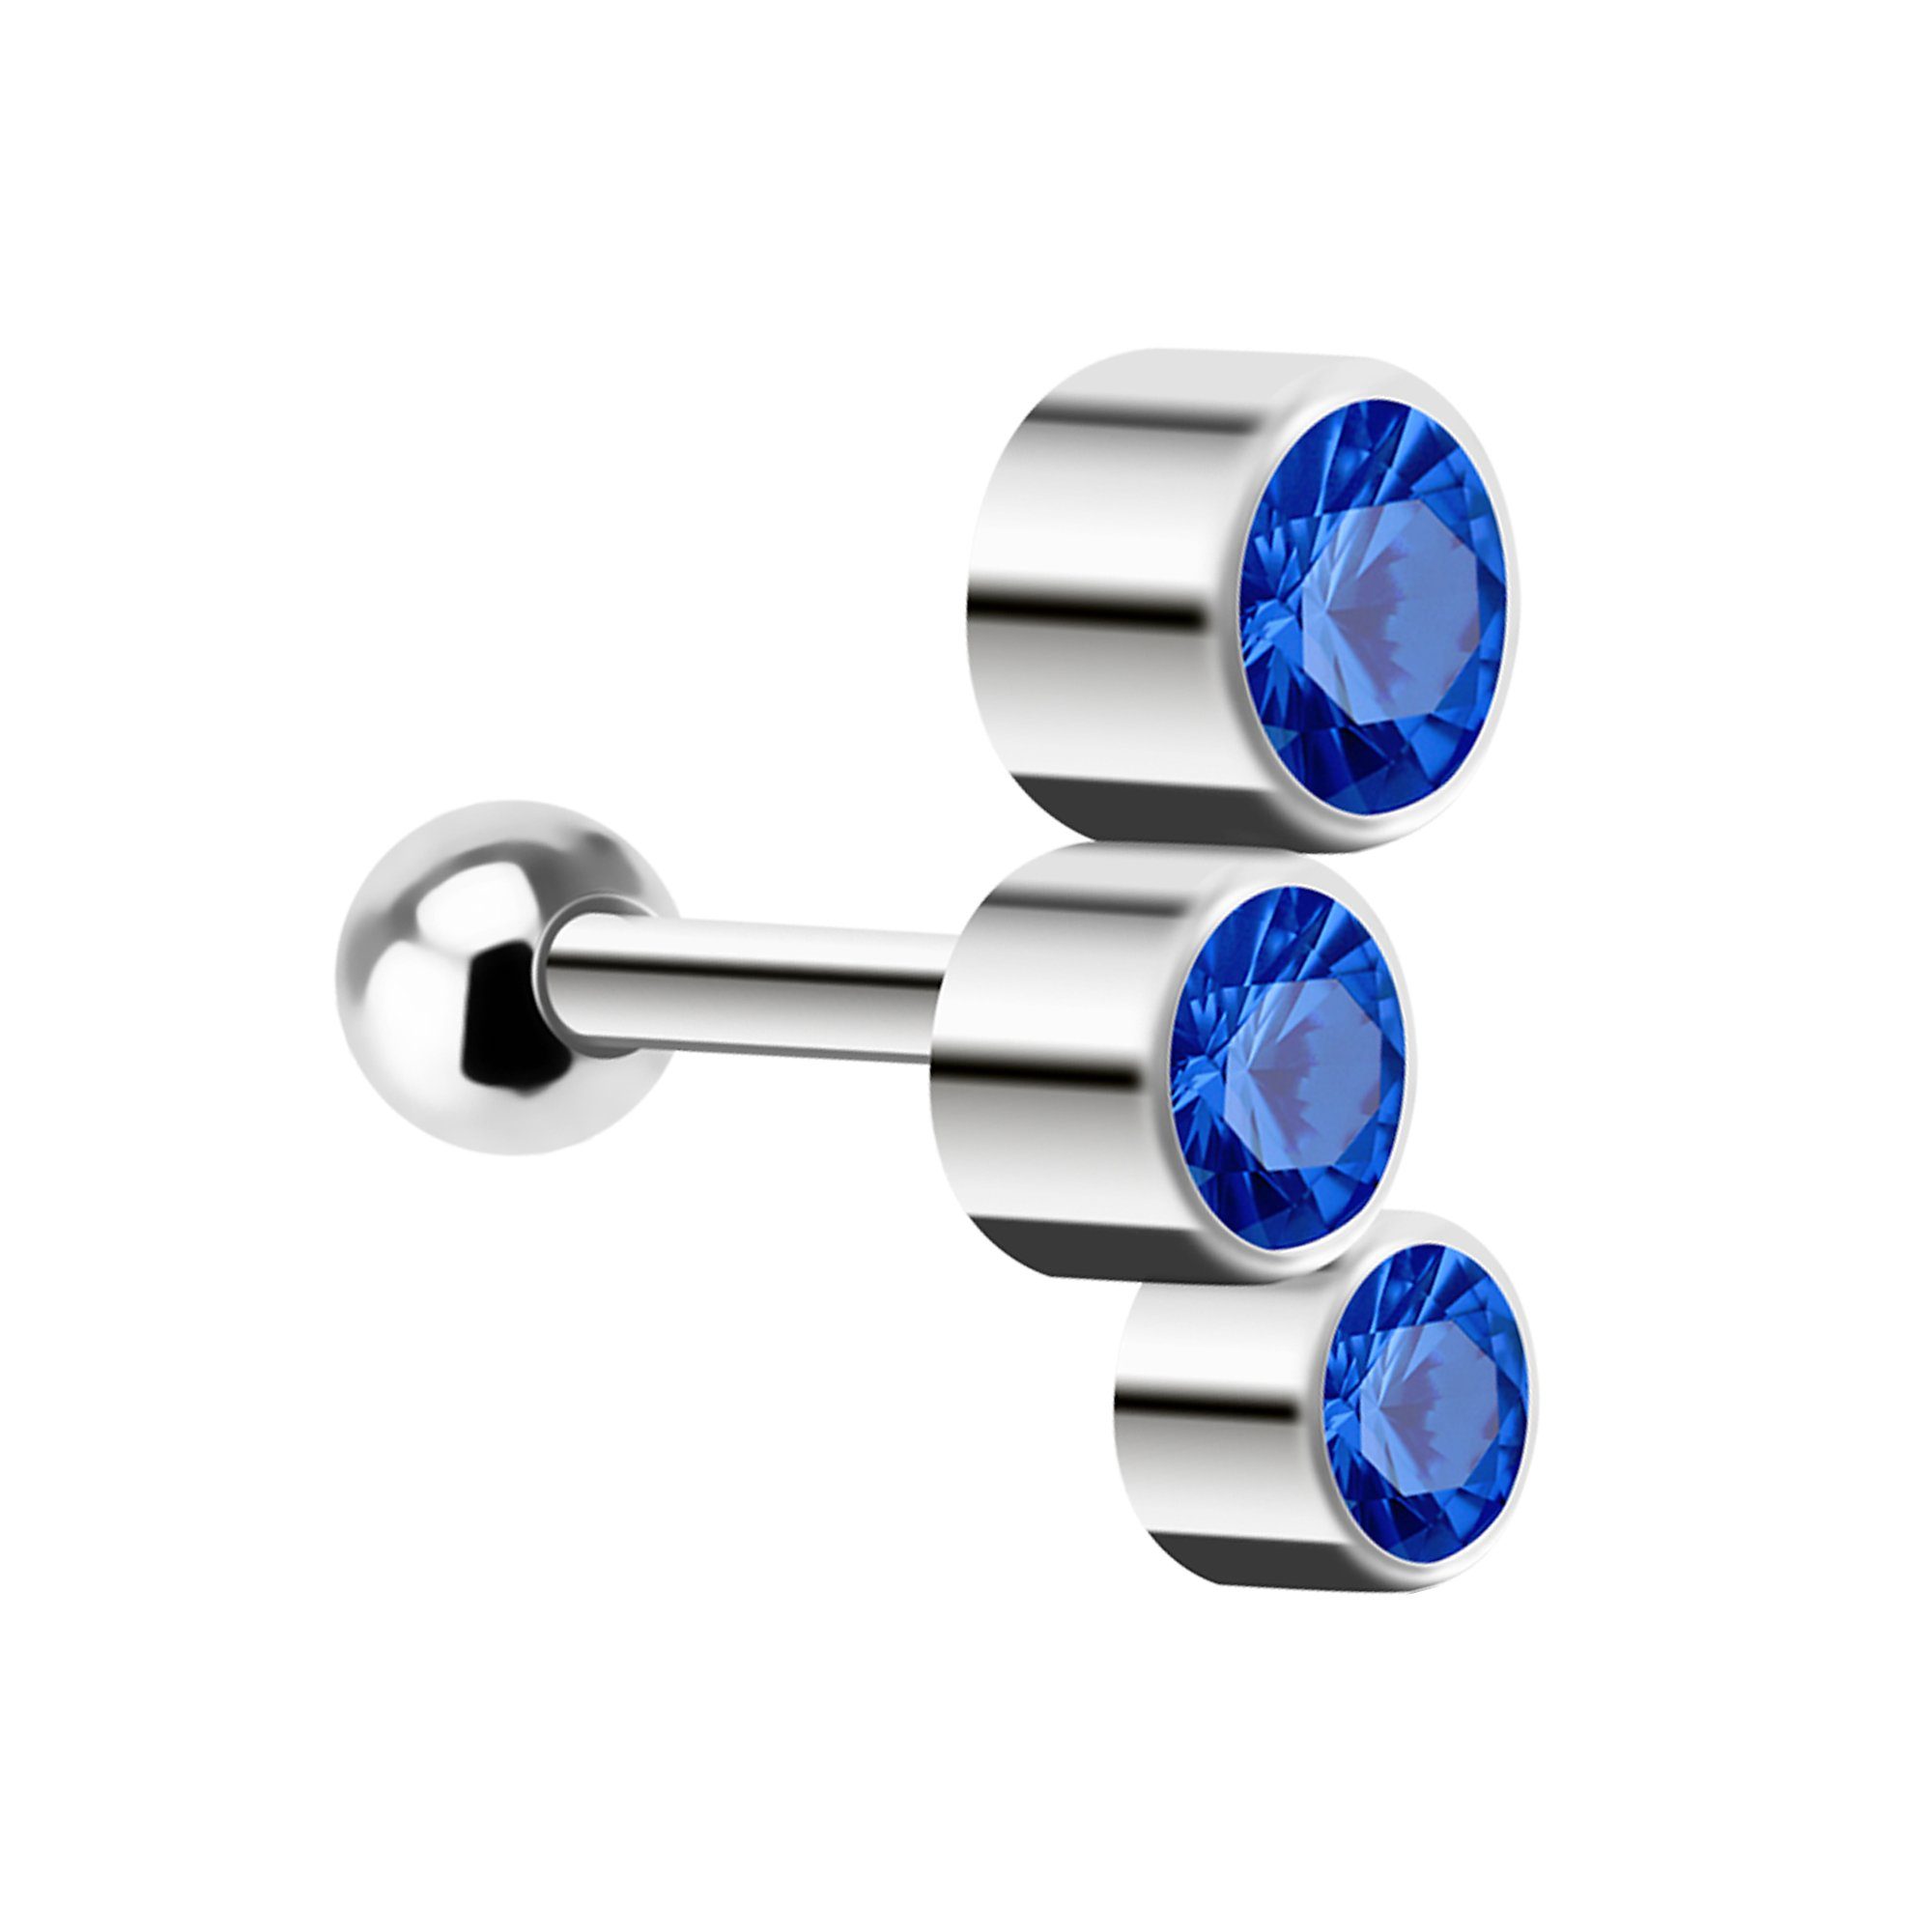 Taffstyle Piercing-Set Ohr Tragus Knorpel Helix Triple Kristall Kugeln, Piercing Stecker Glitzer Ohr Cartilage Ohrpiercing Barbell Stab blau